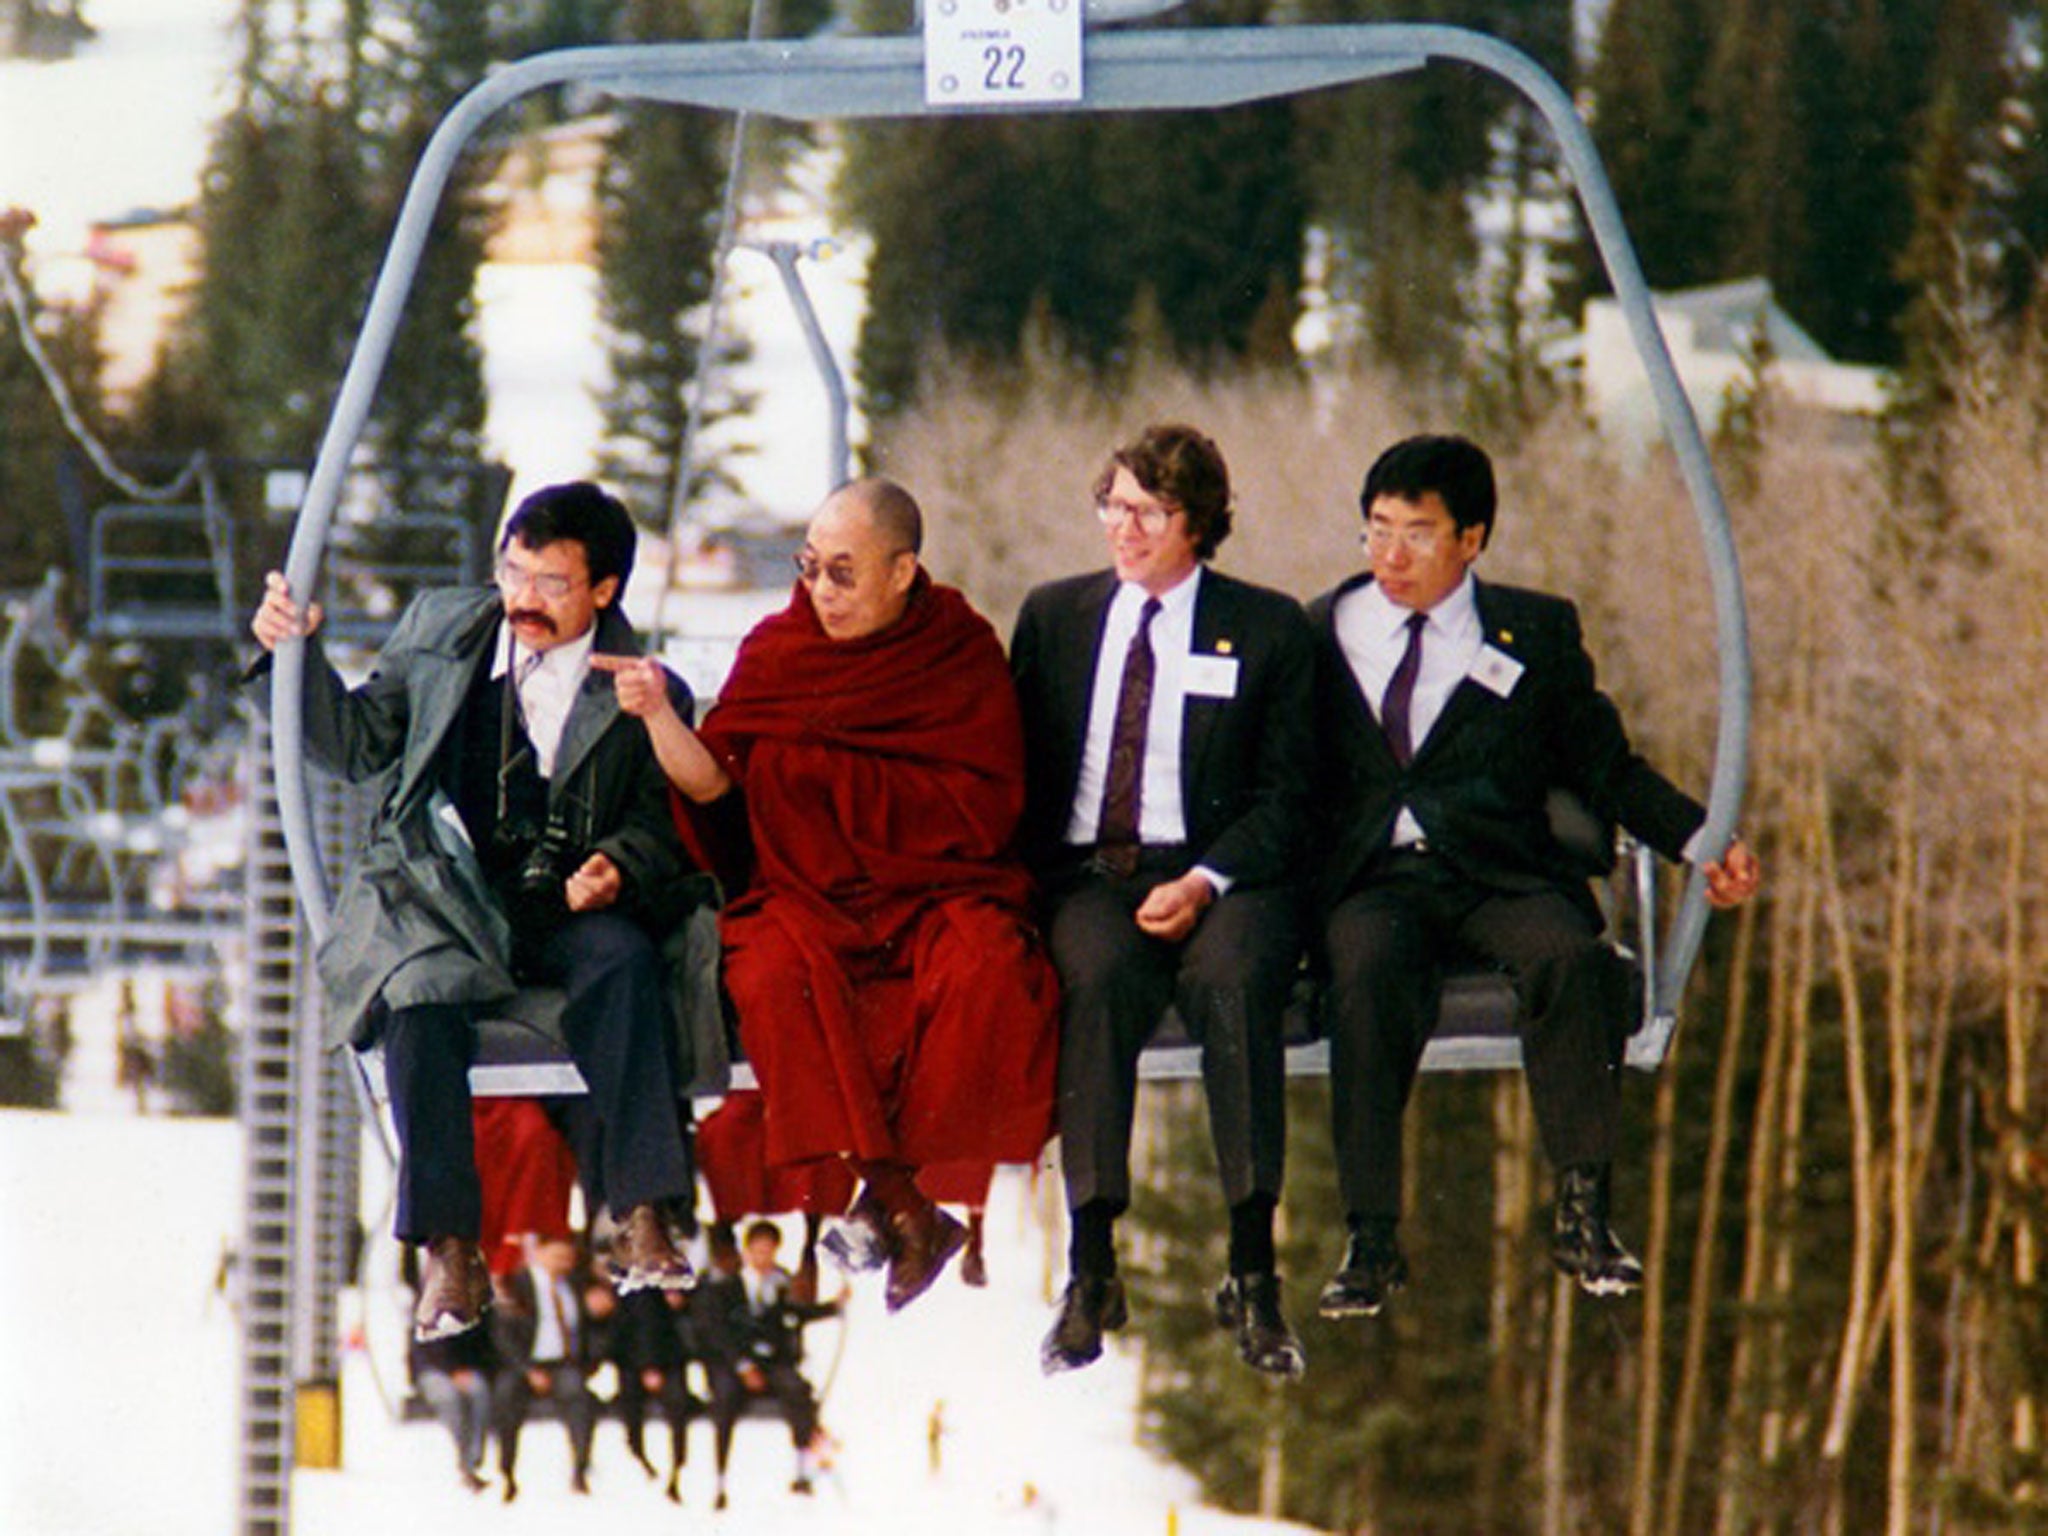 Snow job: the Dalai Lama on a ski-lift in Santa Fe, taken by the late Bob Shaw